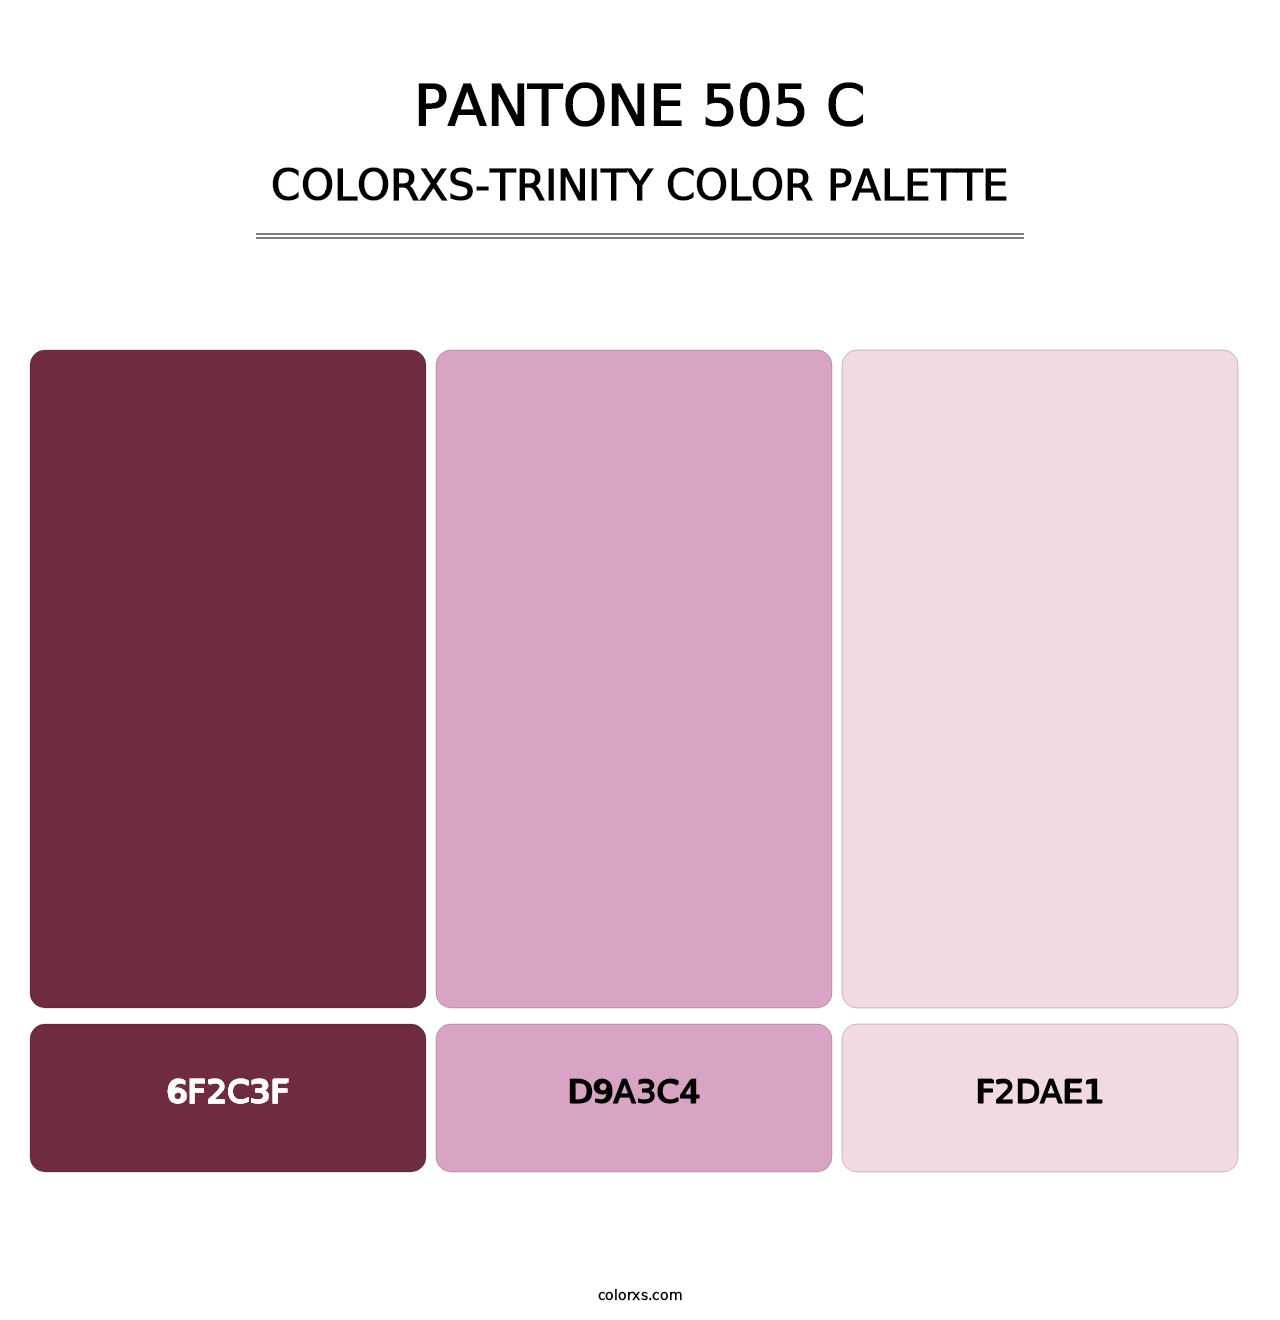 PANTONE 505 C - Colorxs Trinity Palette